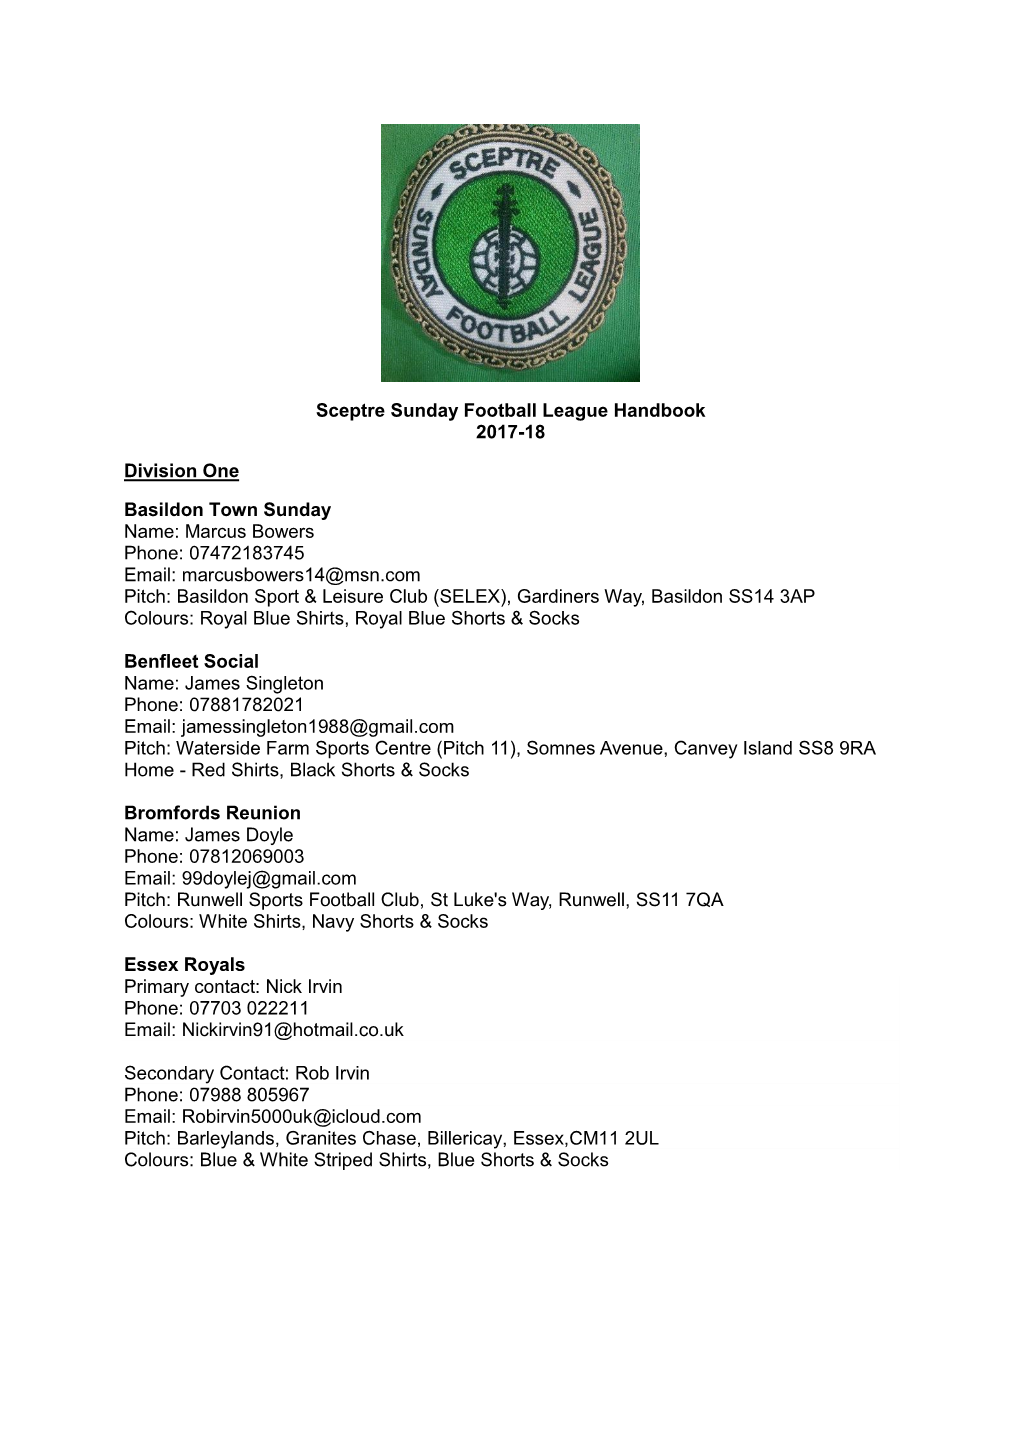 Sceptre Sunday Football League Handbook 2017-18